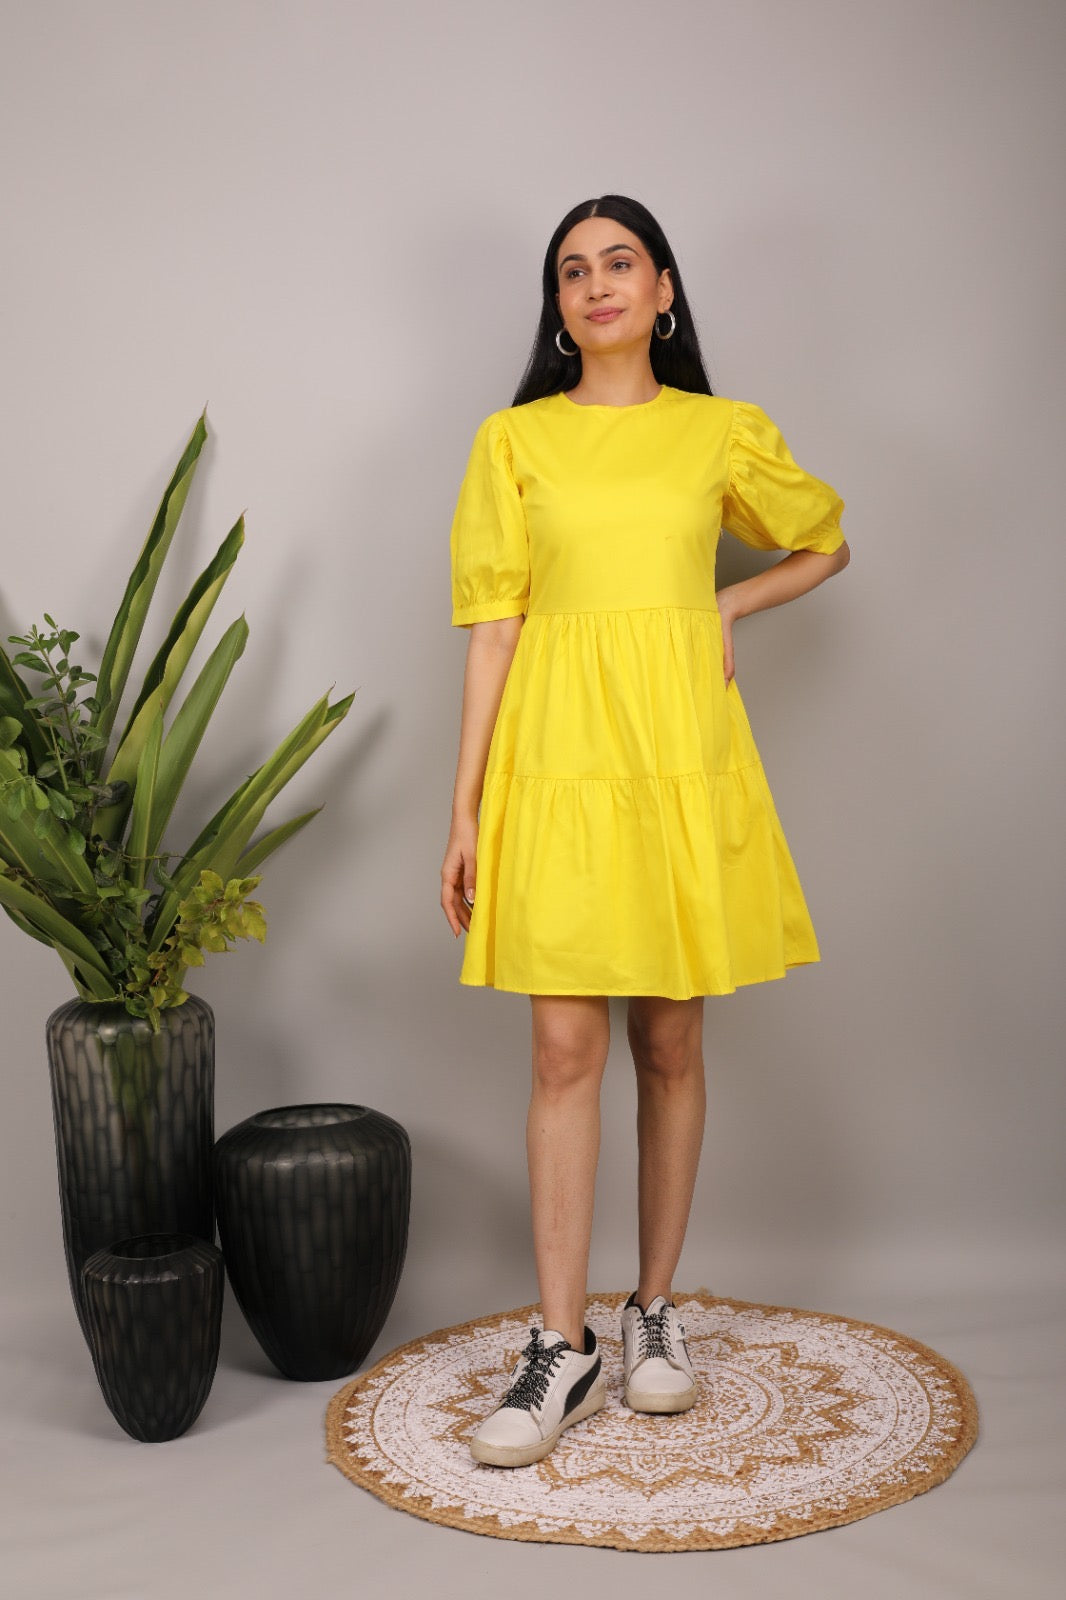 Hot Yellow dress